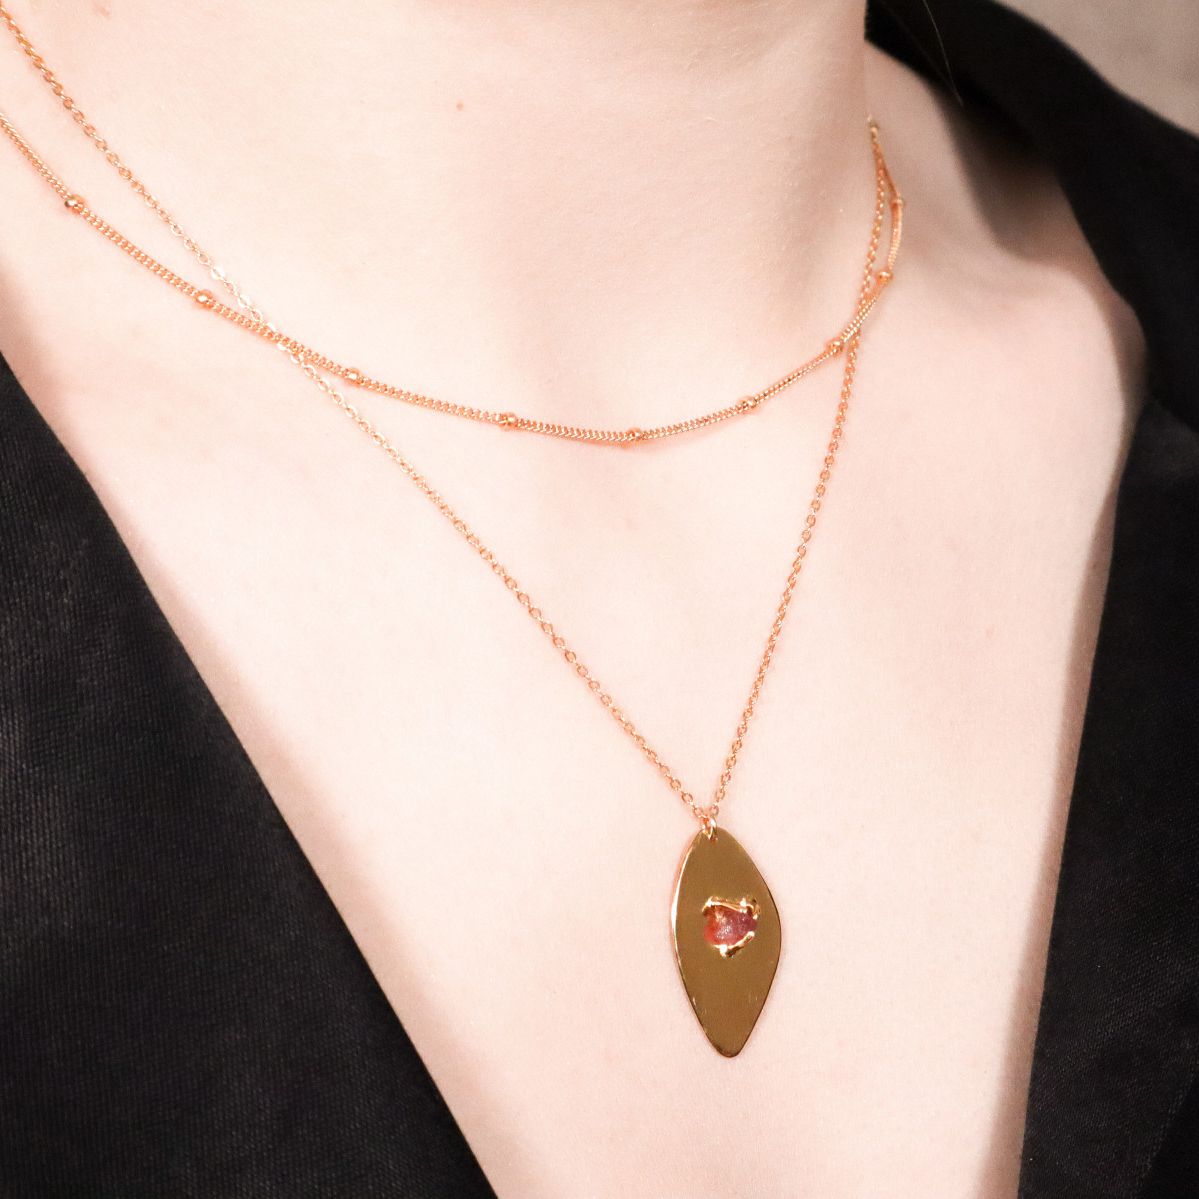 Collier pendentif - Double Chaine - Or et Tourmaline Brute Rouge serti griffes